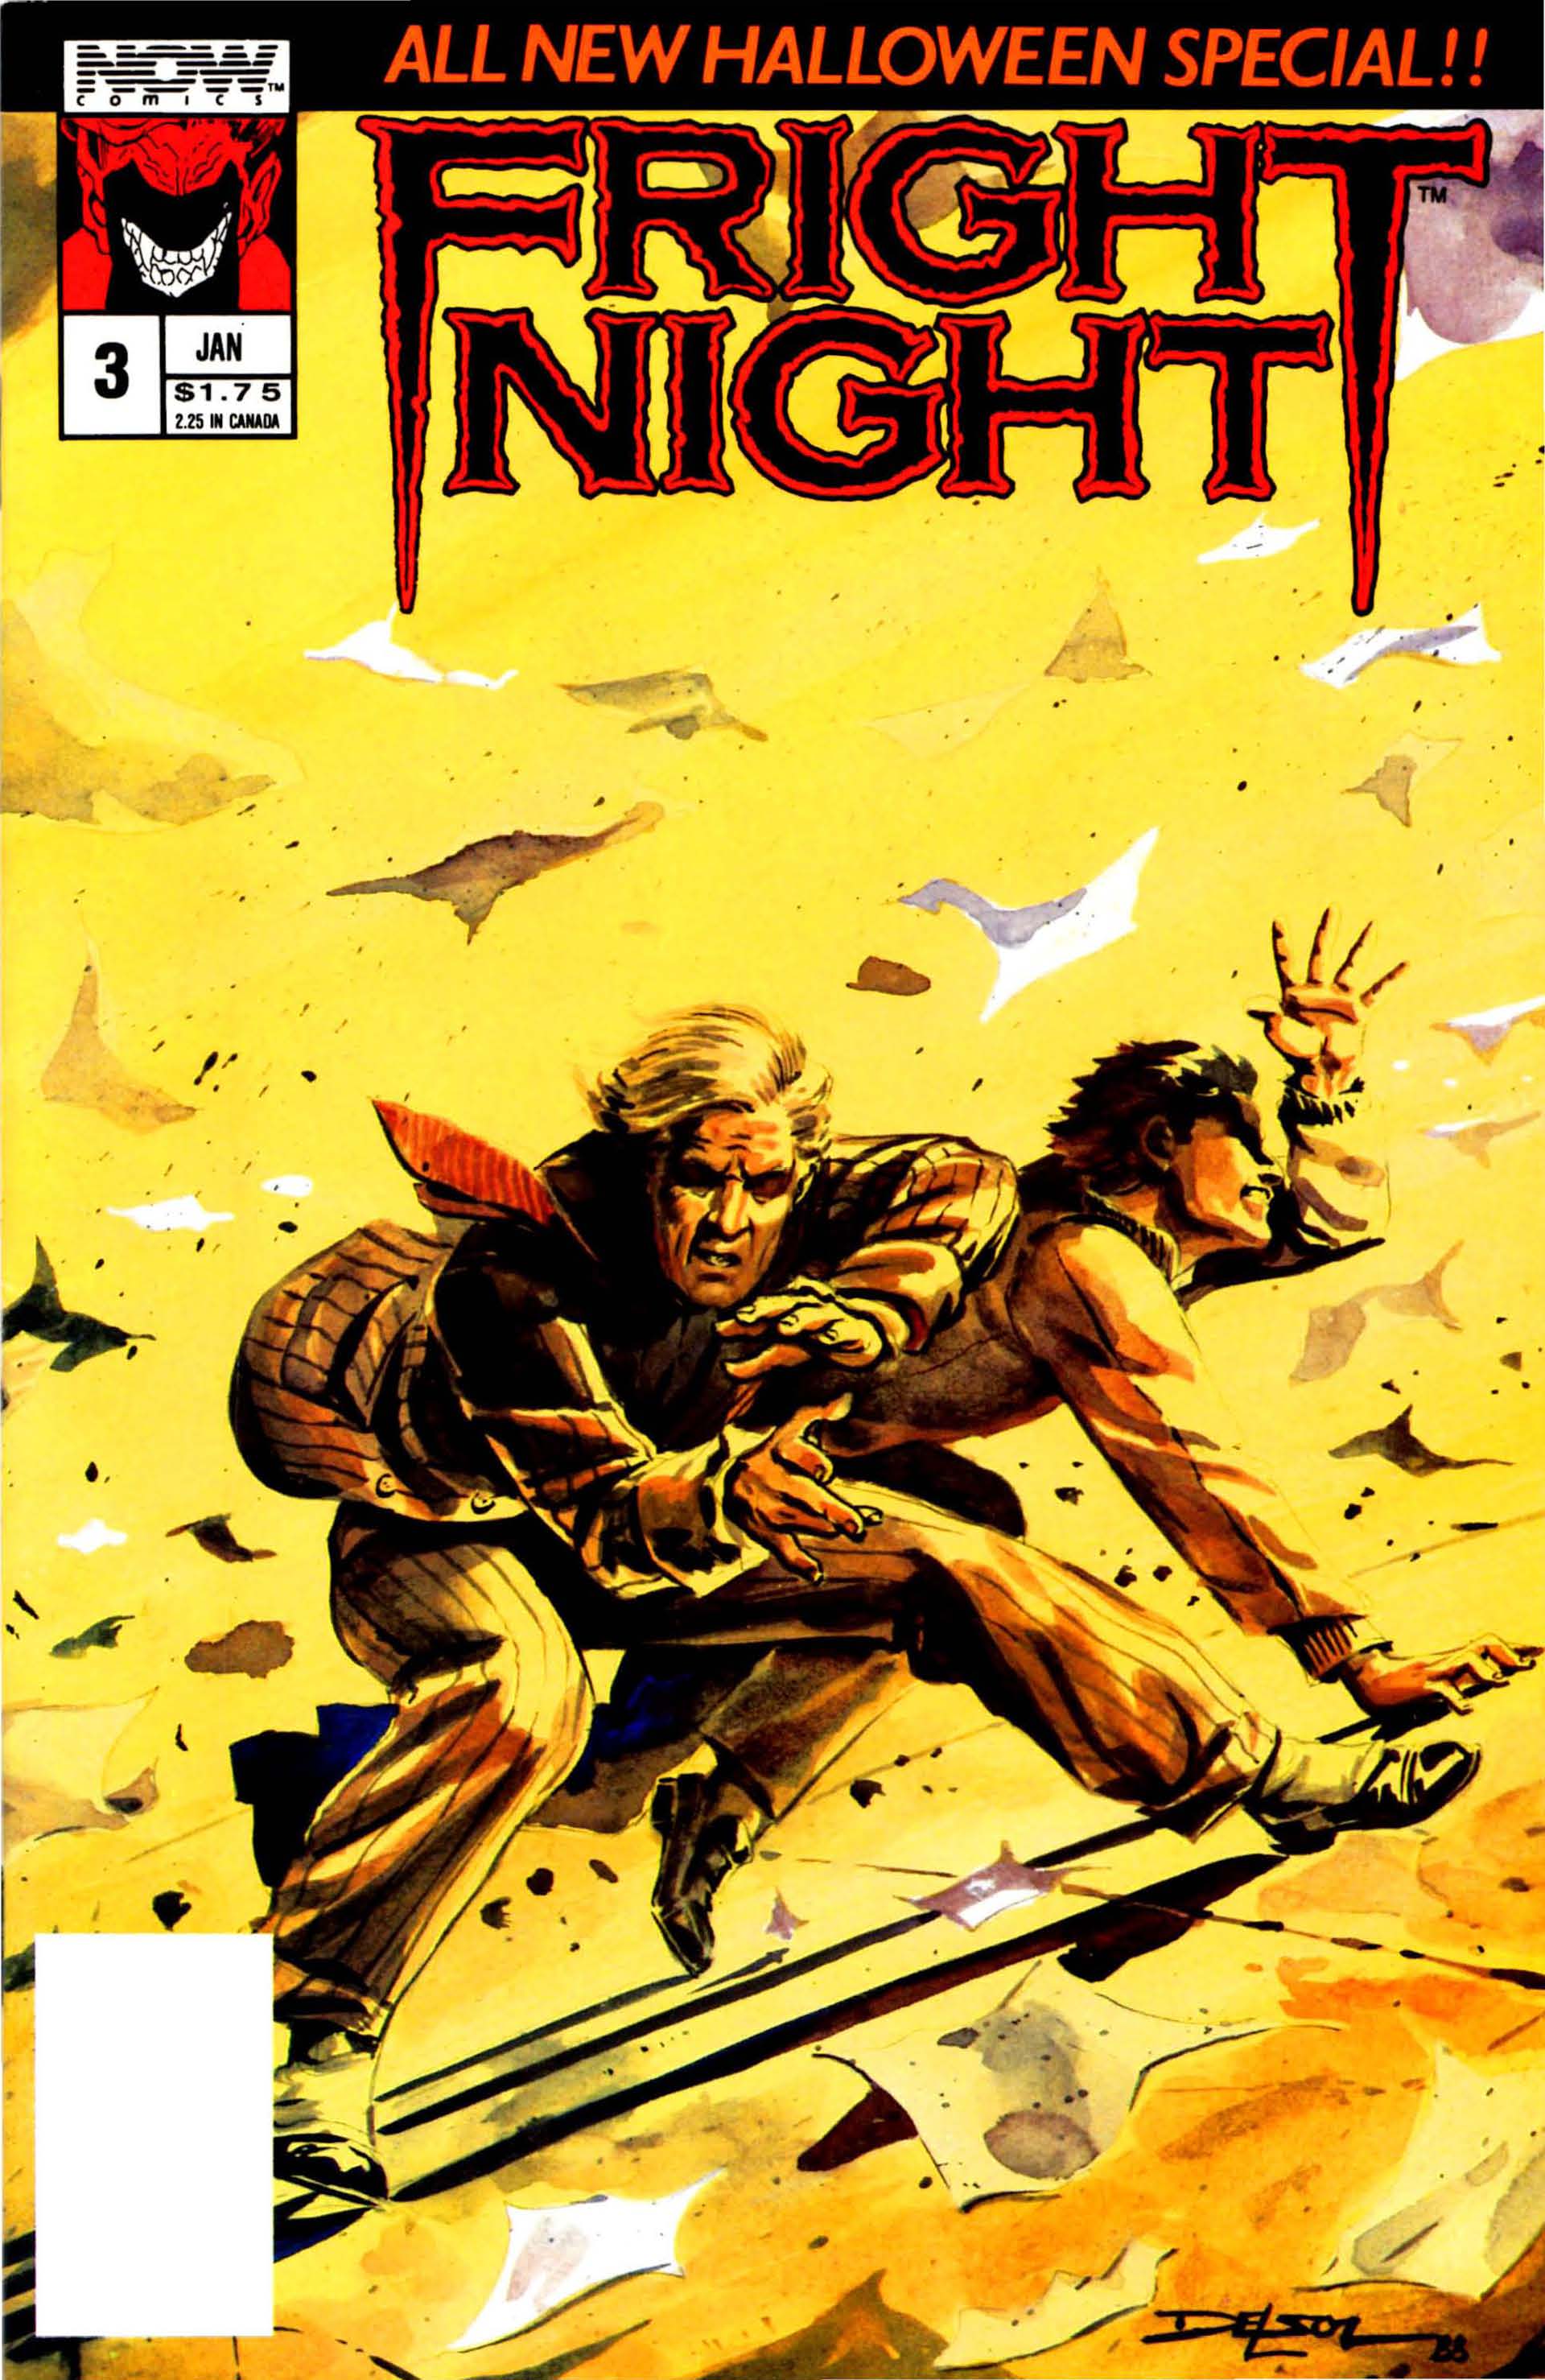 Fright Night Comics | Fright Night Wiki | Fandom powered by Wikia1920 x 2957